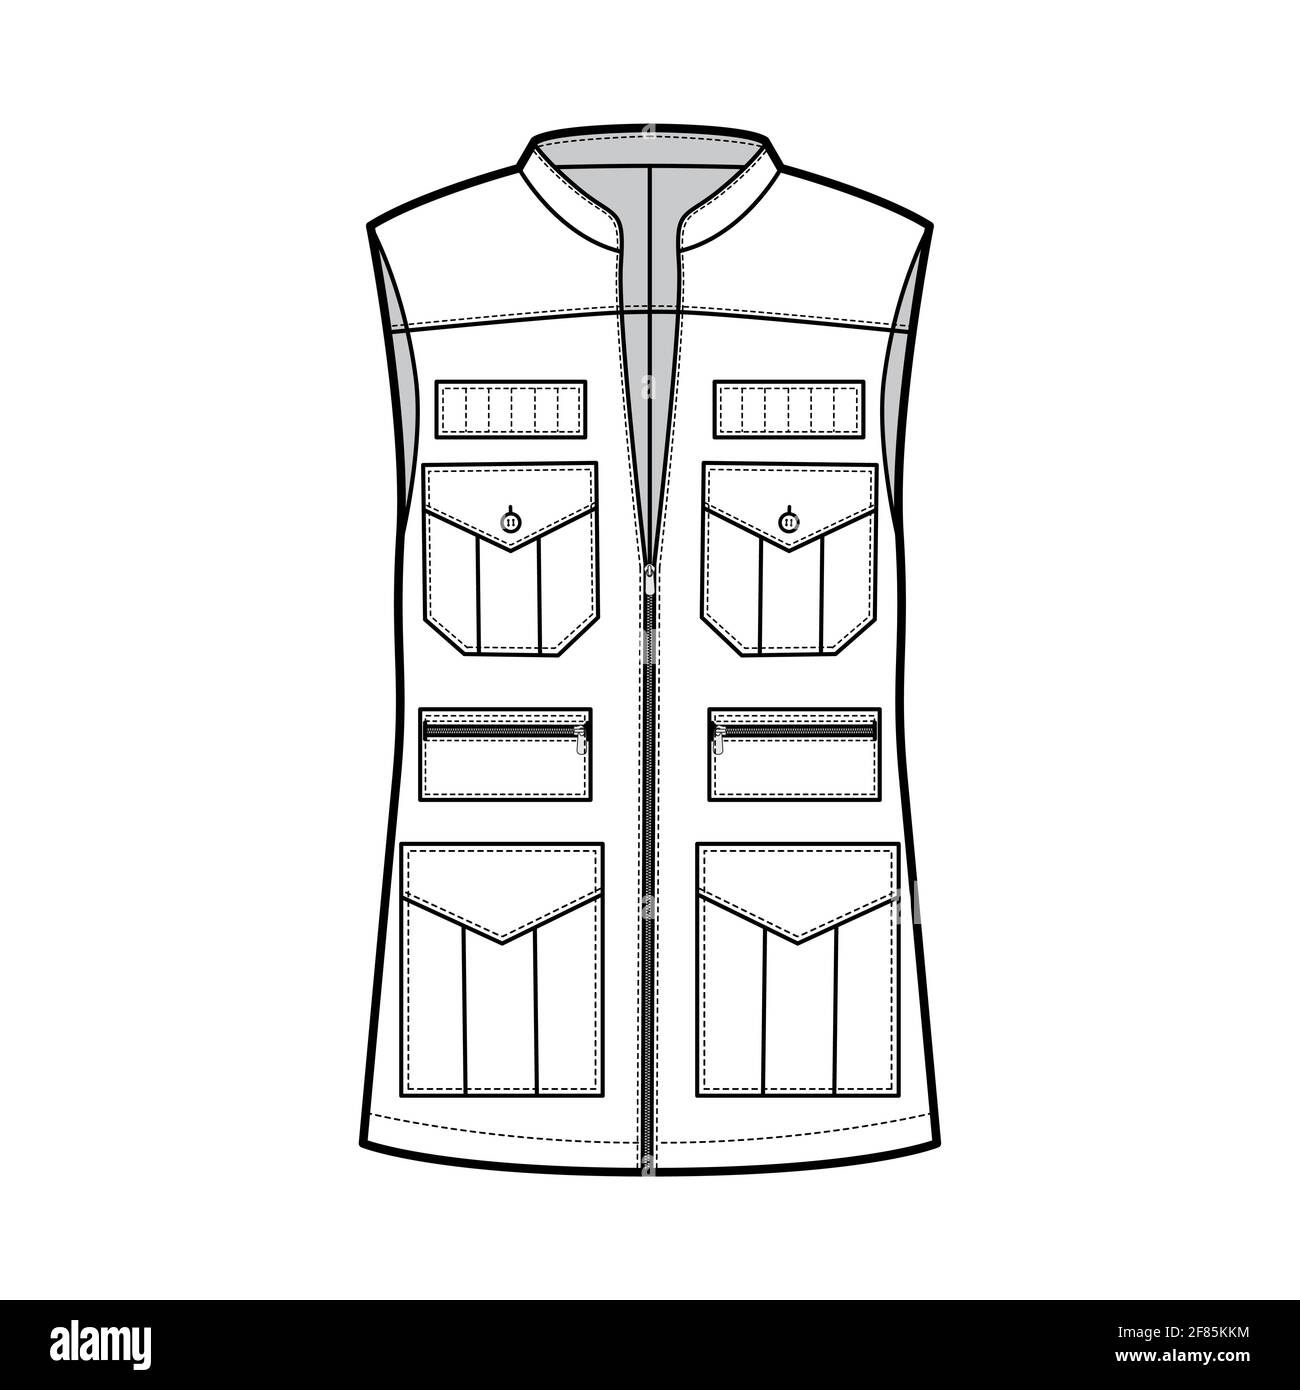 Safari vest waistcoat technical fashion illustration with sleeveless ...